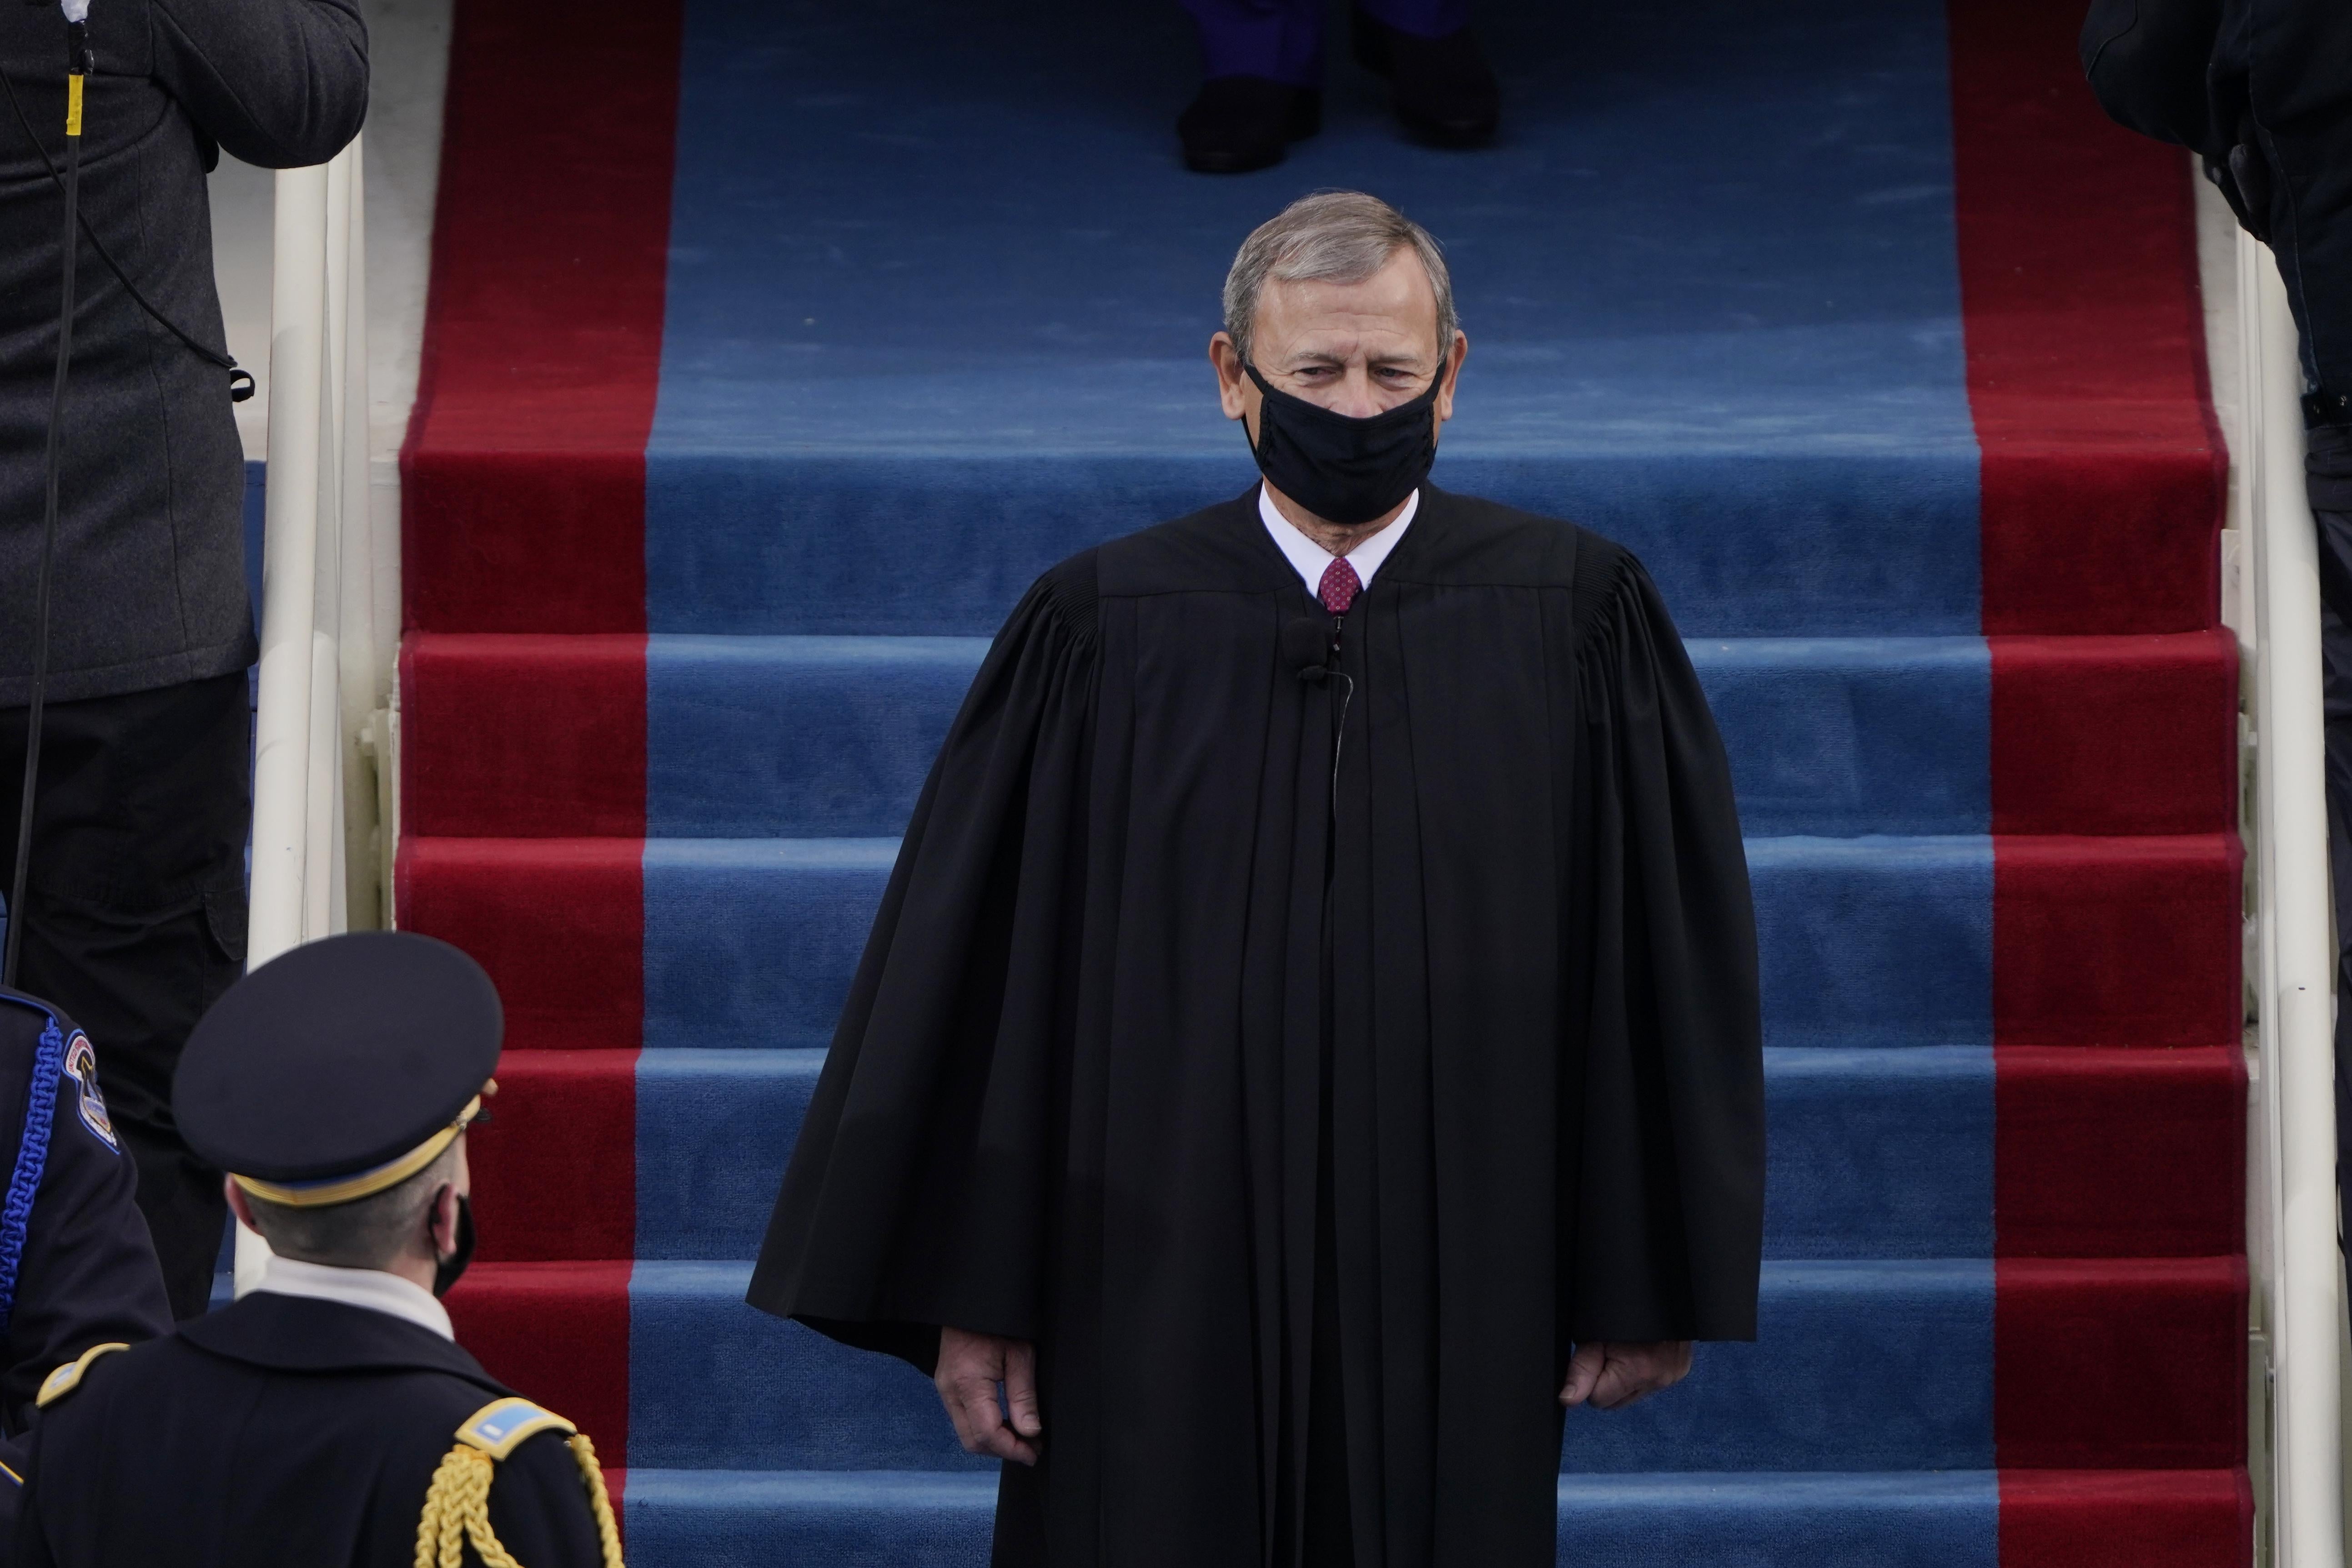 Chief Justice John Roberts wearing his judicial robe and a black mask.